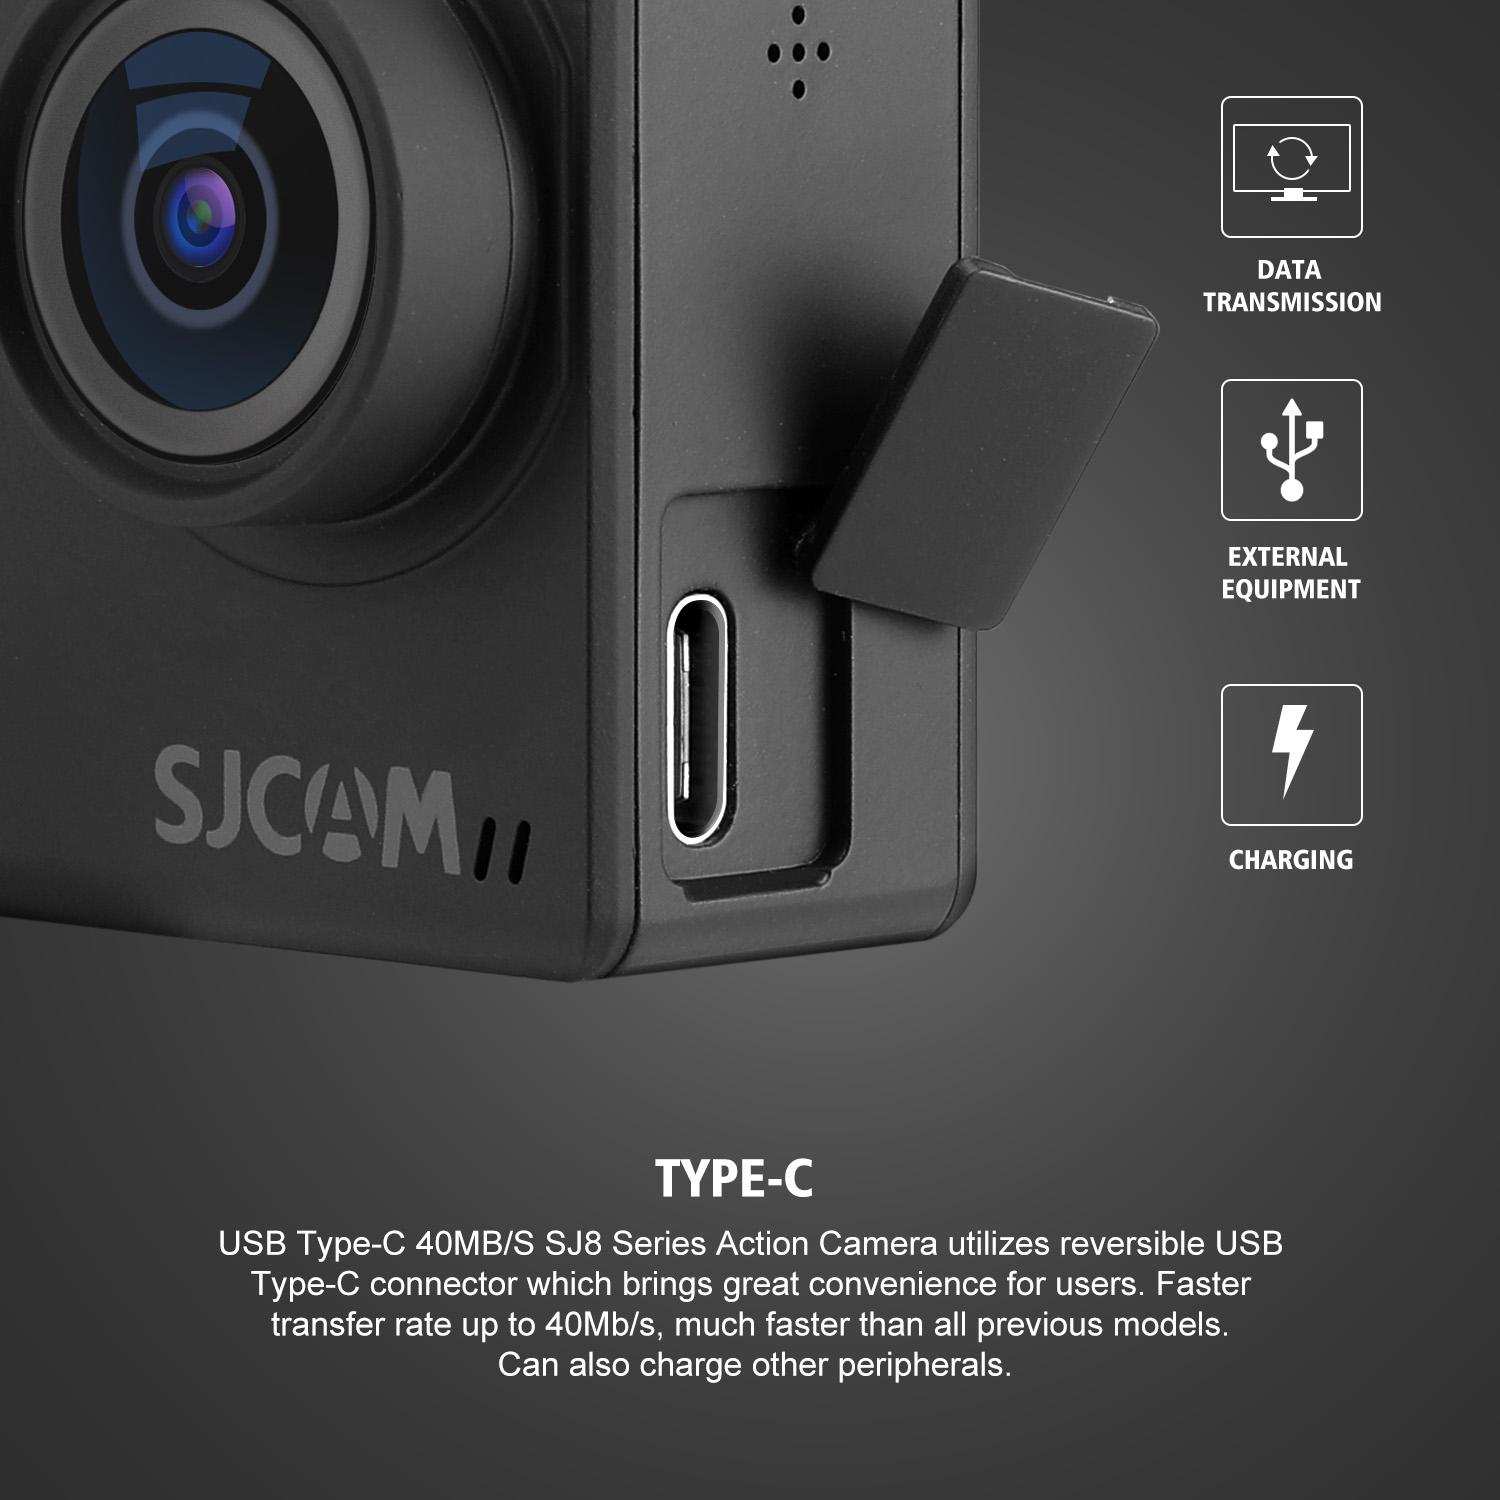 SJCAM SJ8 Series Action Camera SJ8 Air